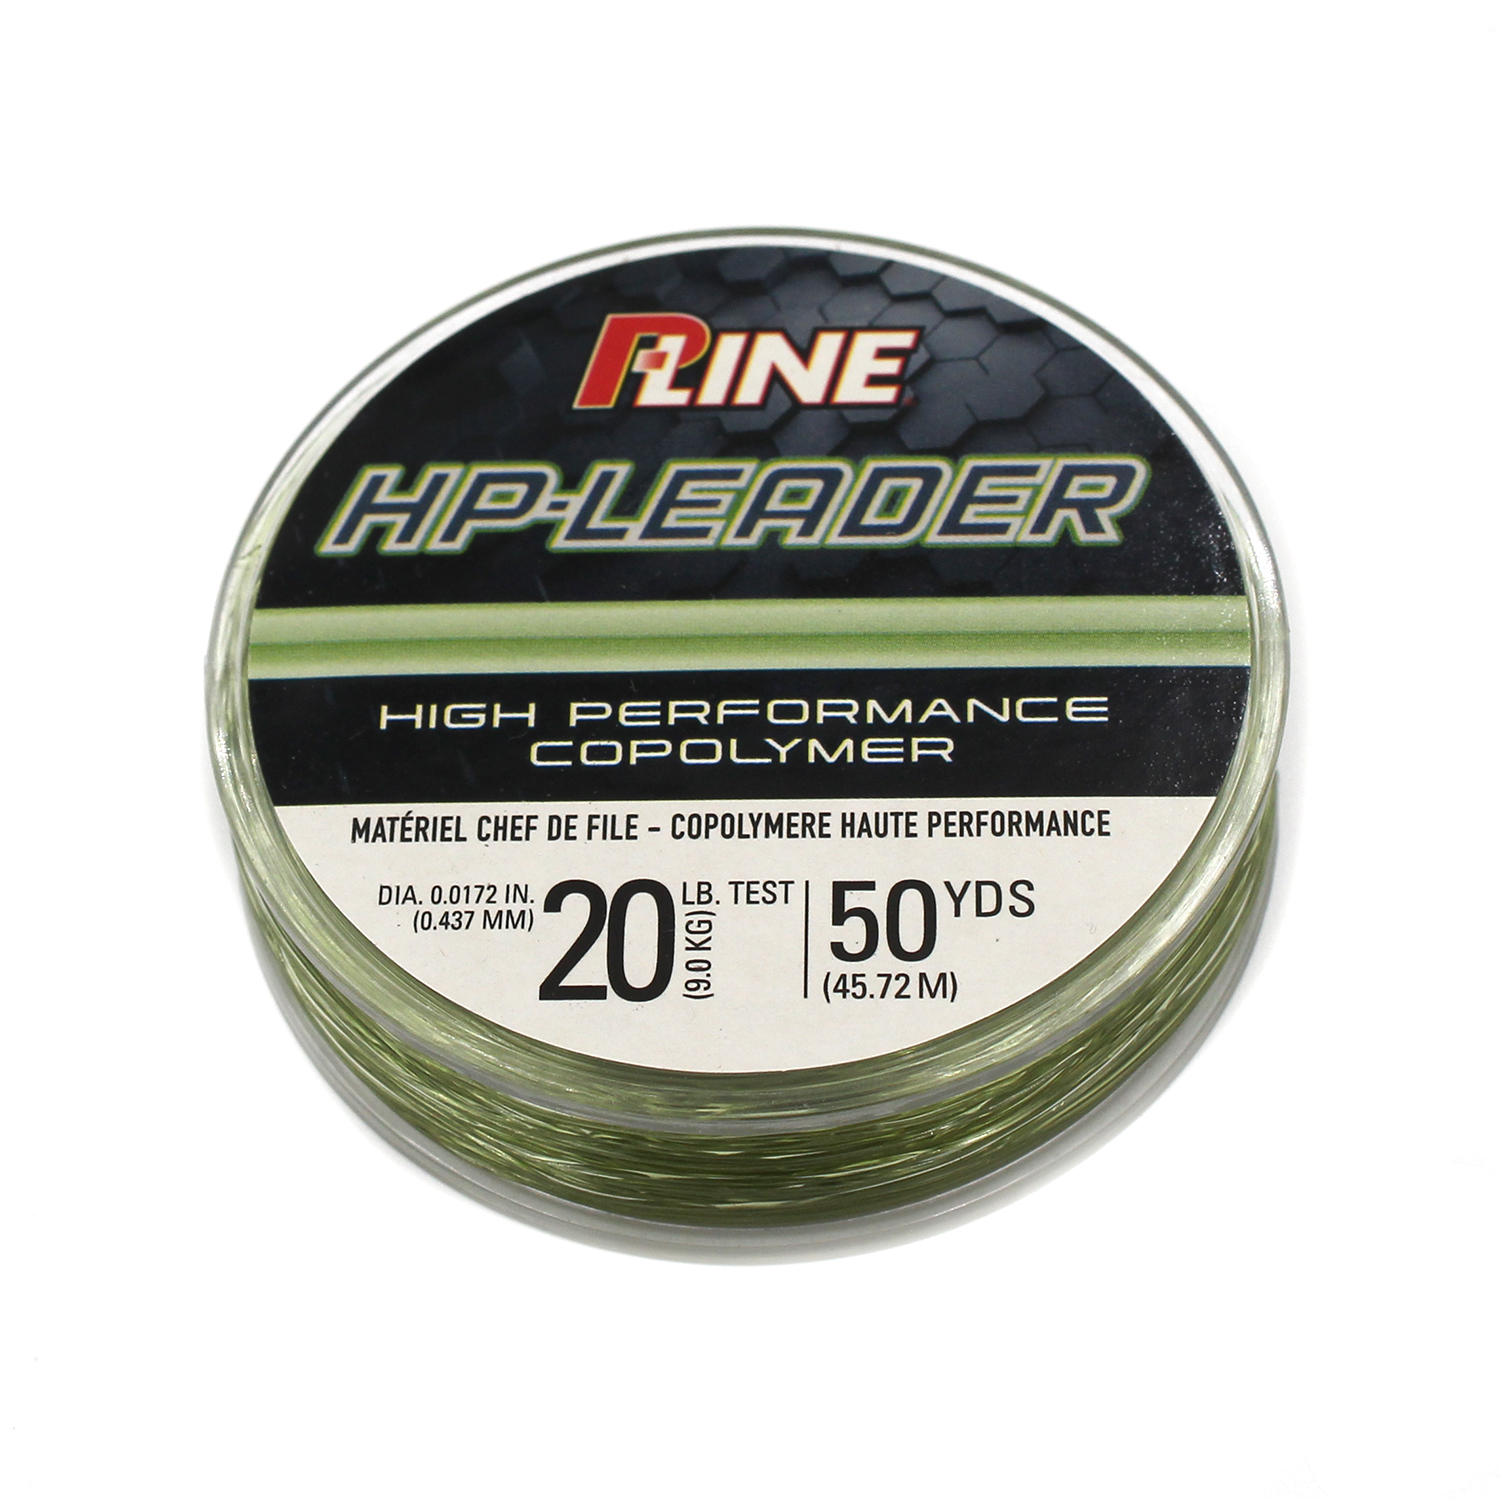 P-Line HP Leader High Performance Copolymer